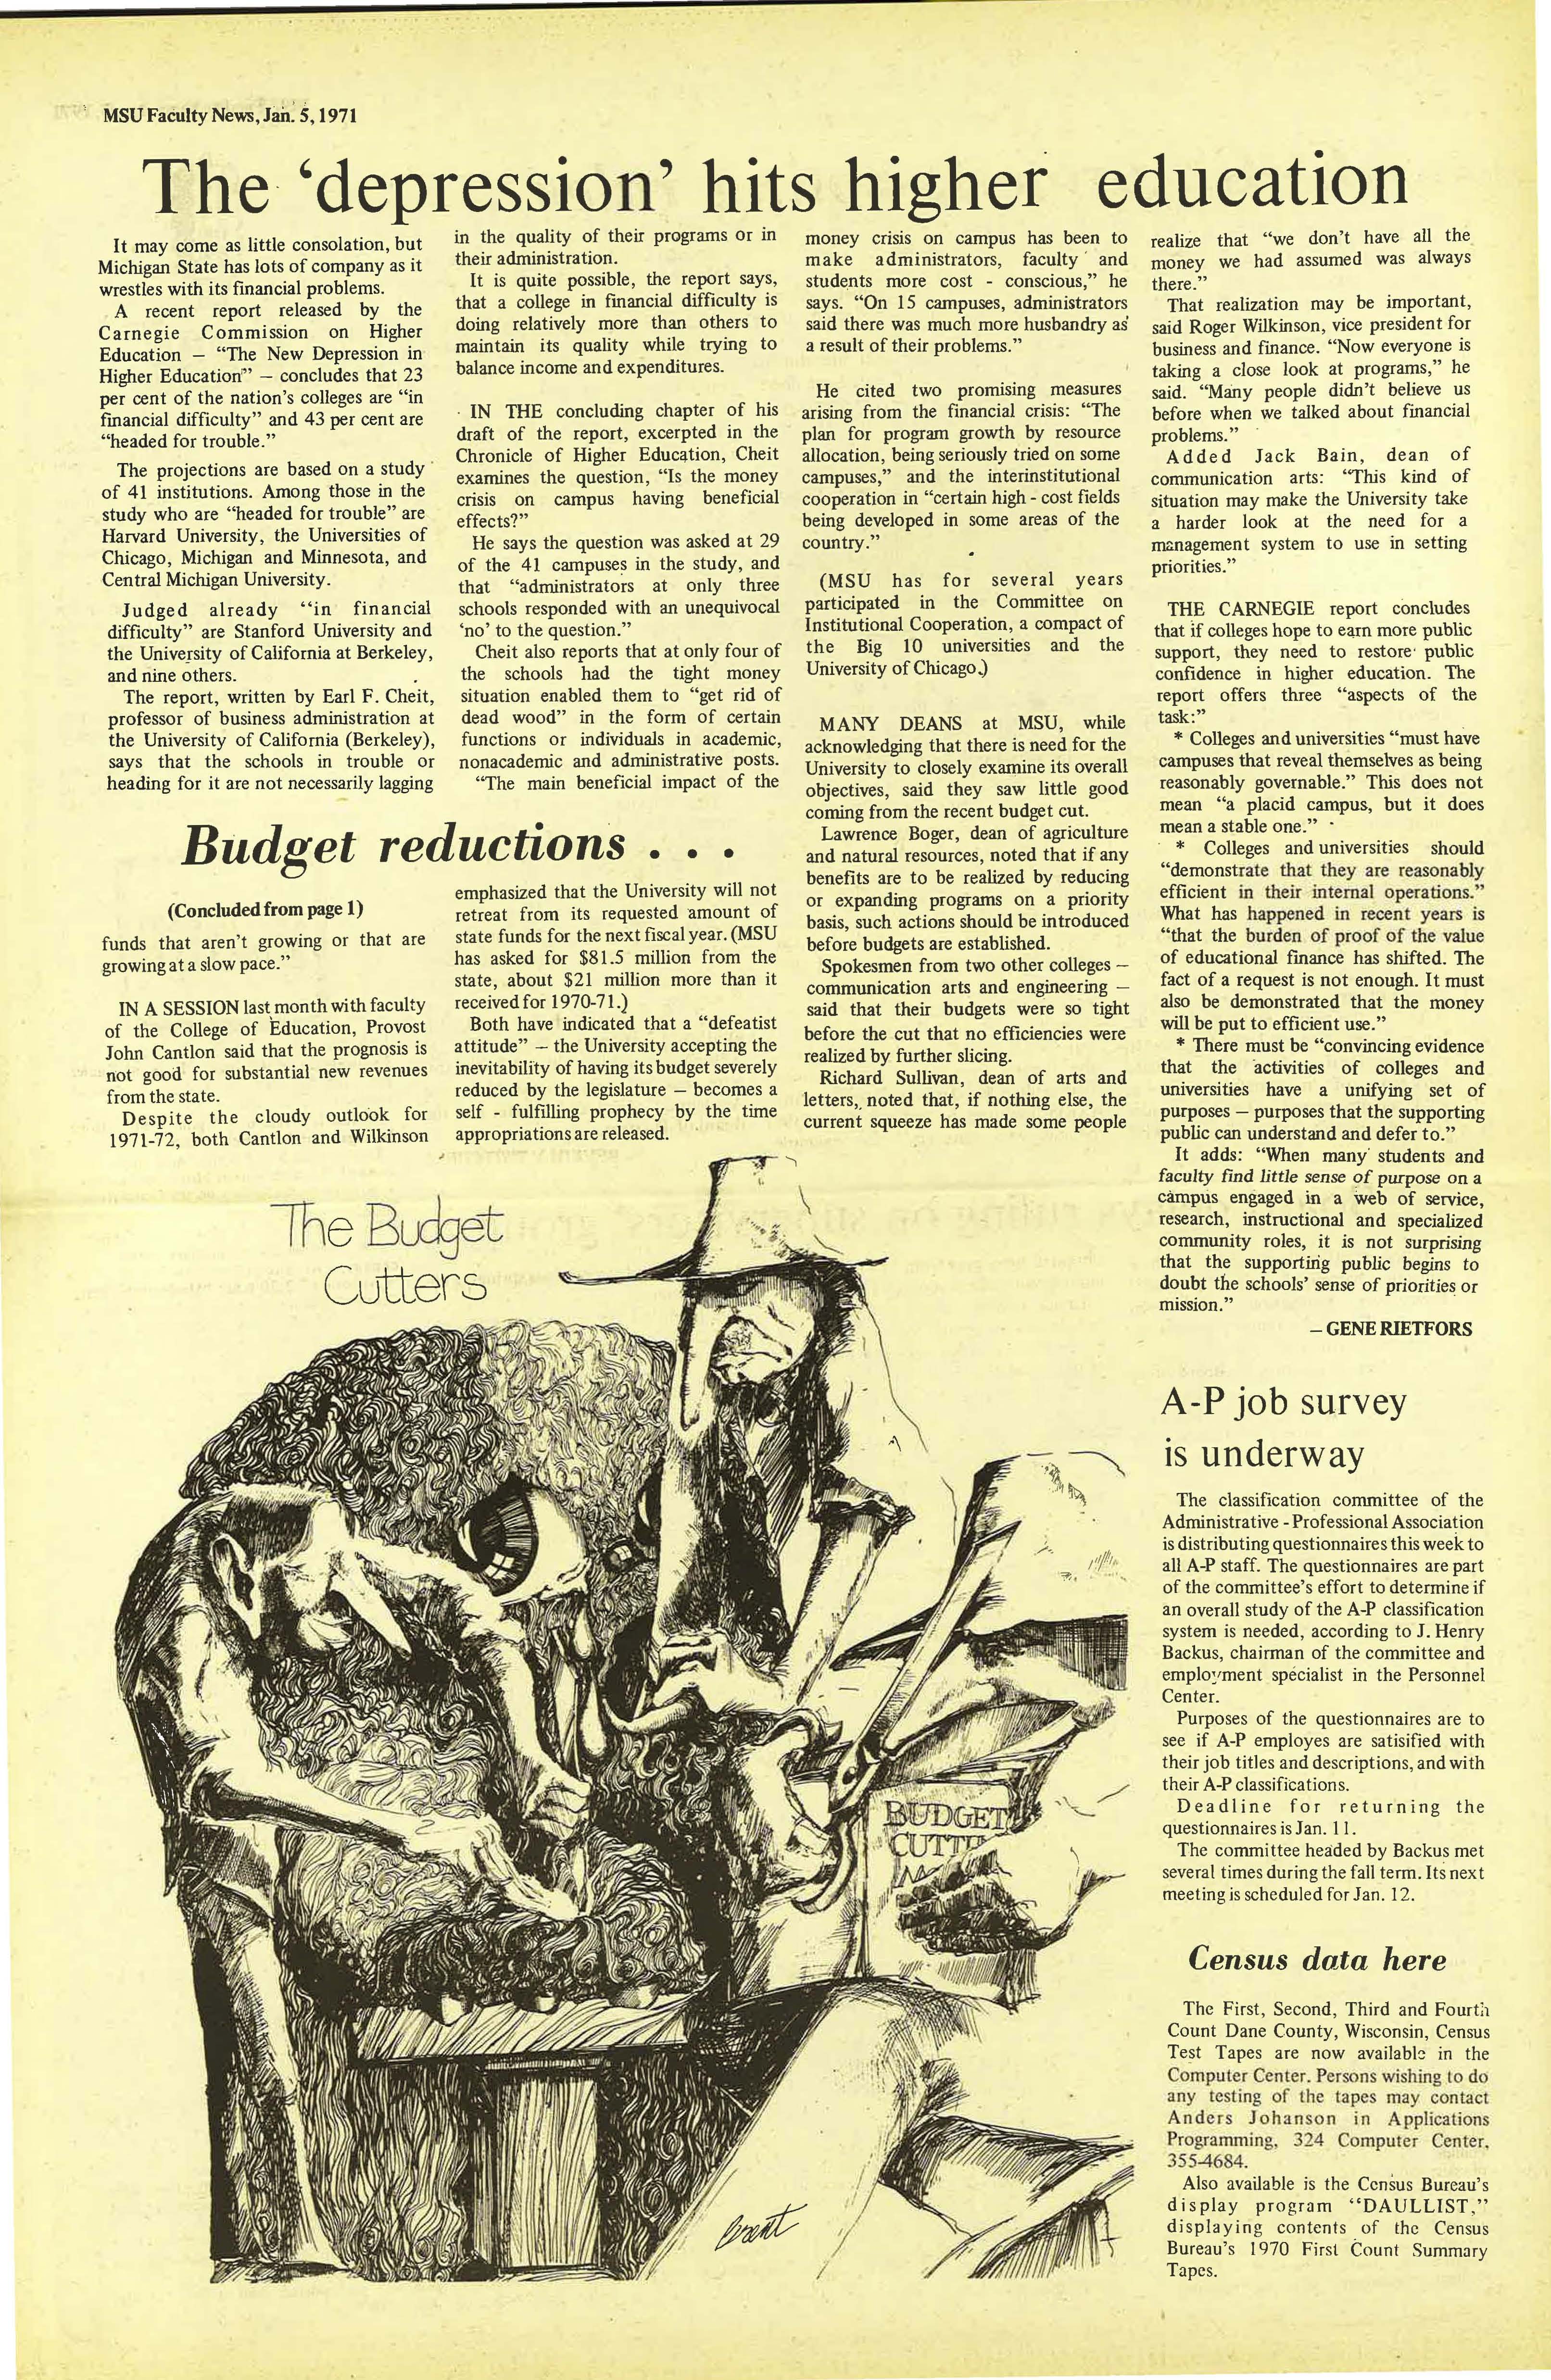 MSU News Bulletin, vol. 2, No. 33, July 29, 1971